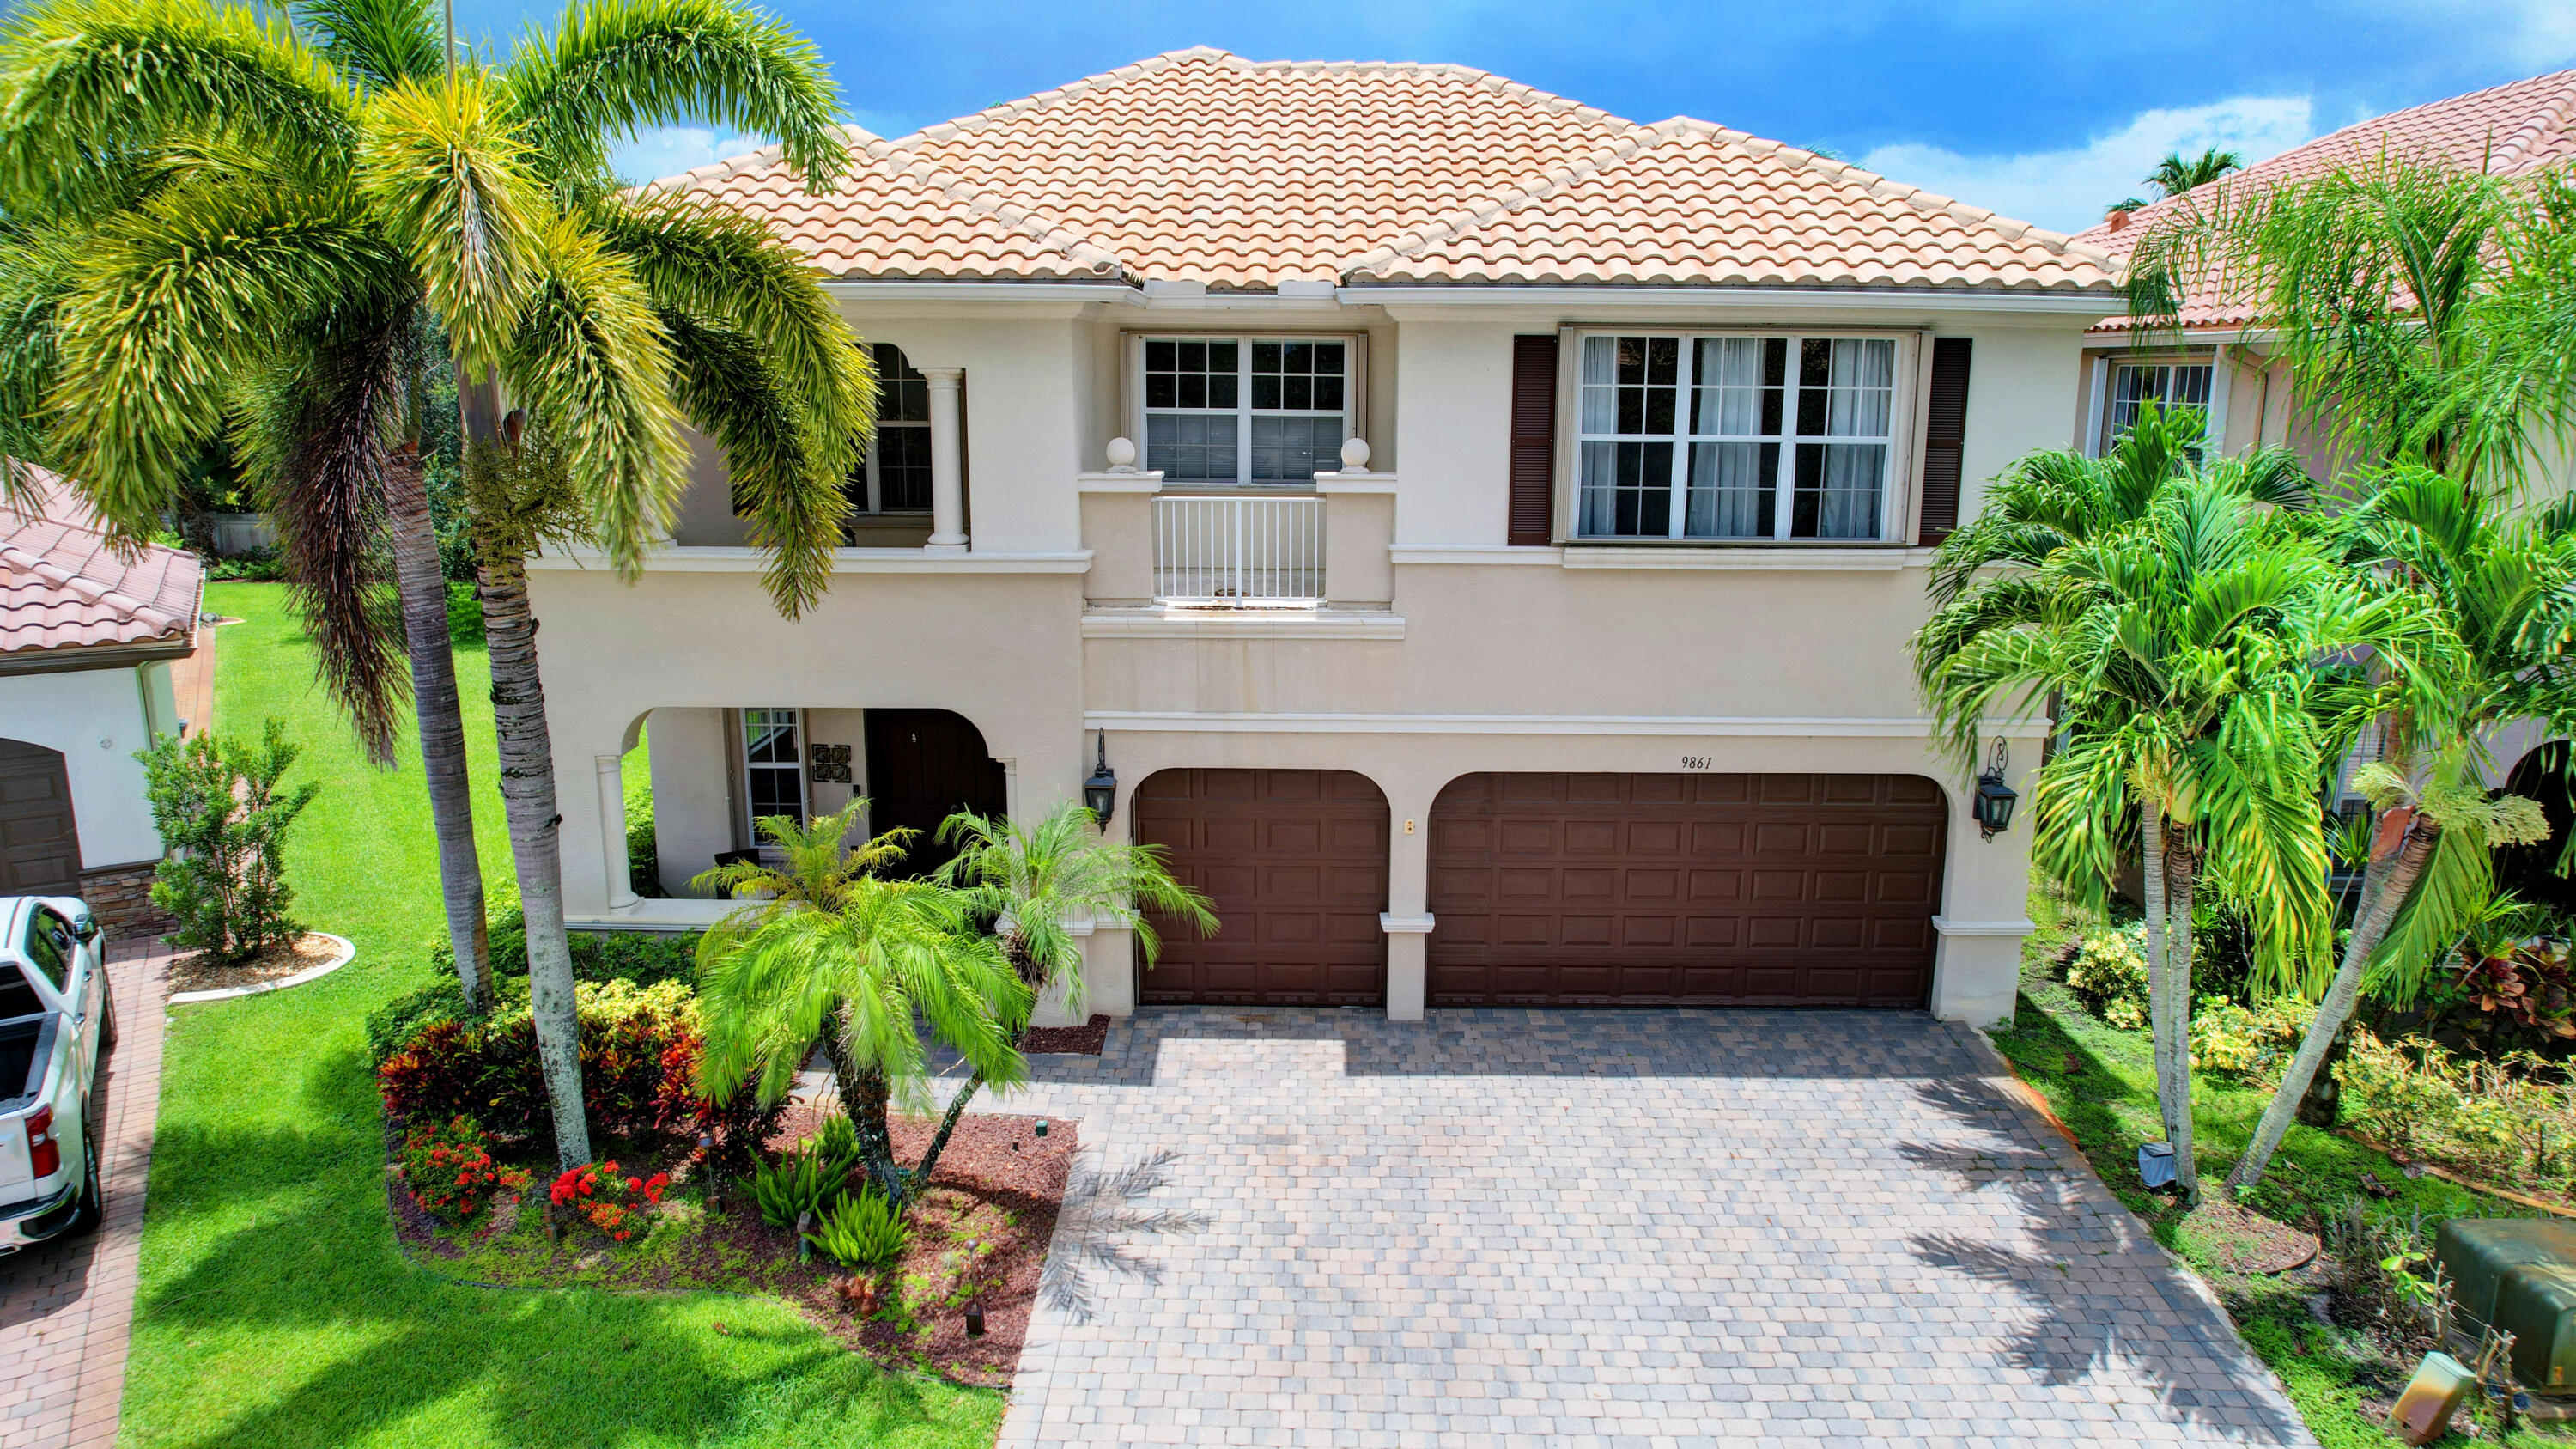 Property for Sale at 9861 Cobblestone Creek Drive, Boynton Beach, Palm Beach County, Florida - Bedrooms: 5 
Bathrooms: 3  - $864,000